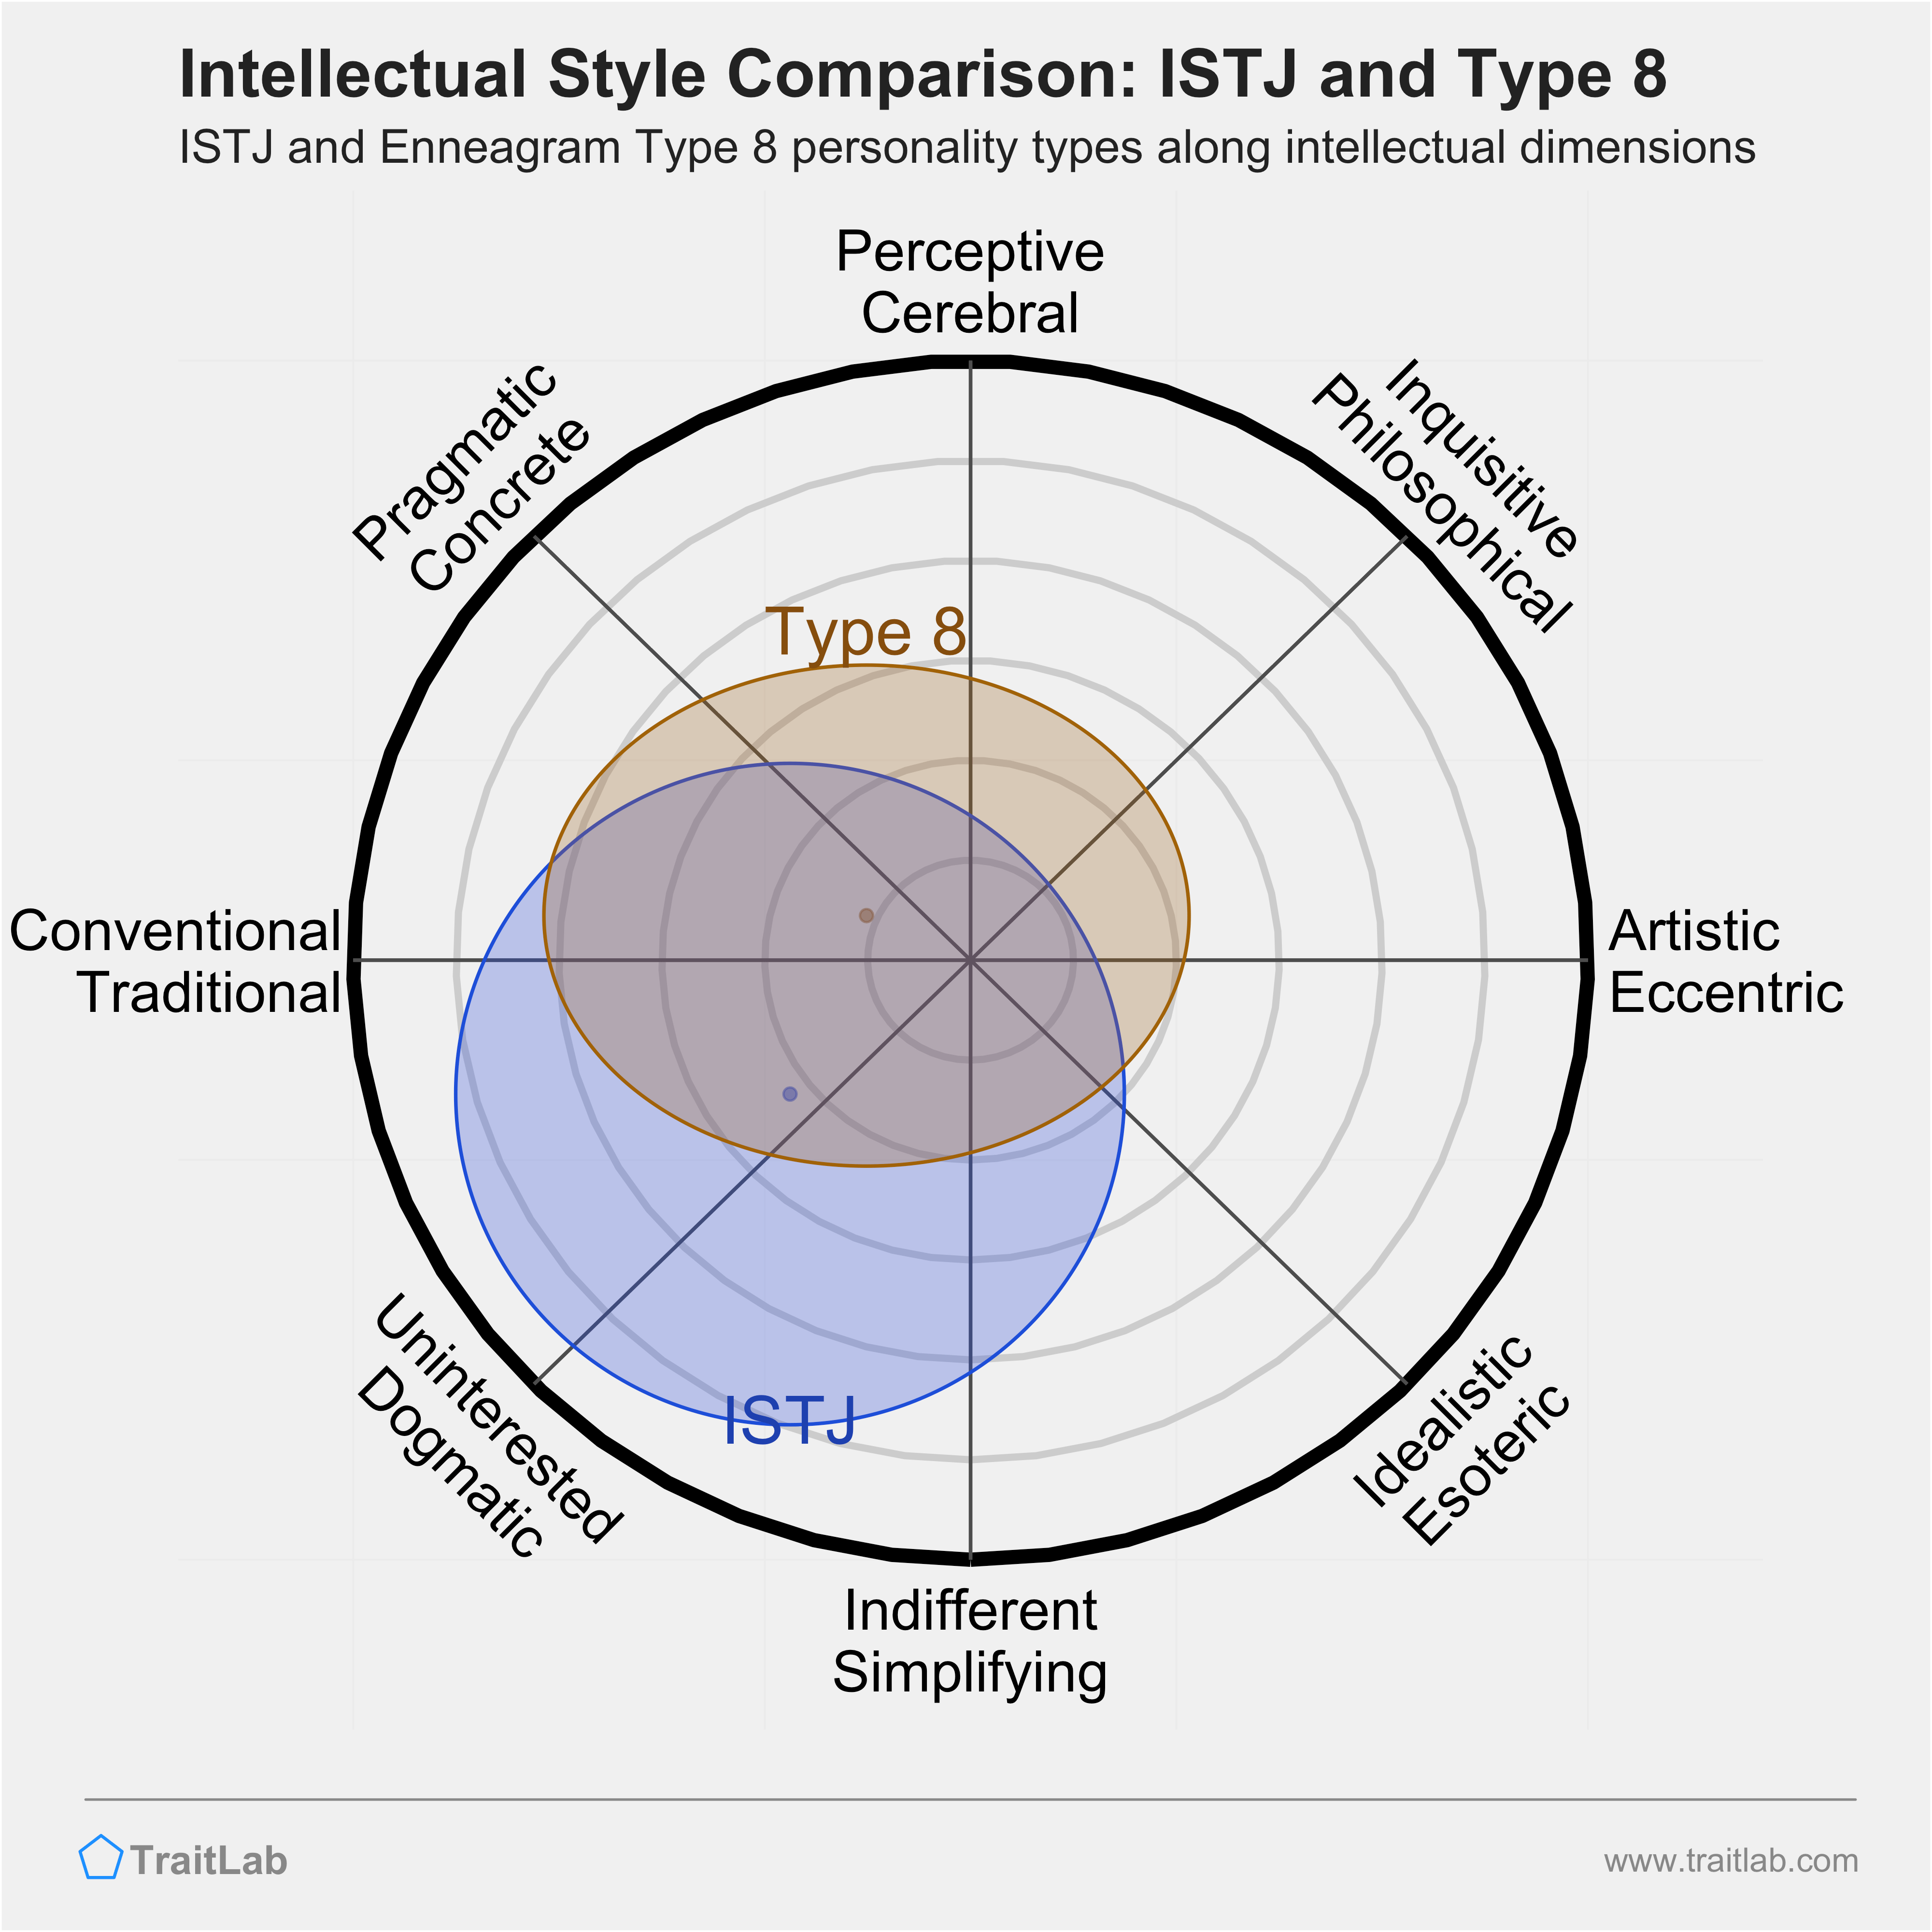 ISTJ and Type 8 comparison across intellectual dimensions